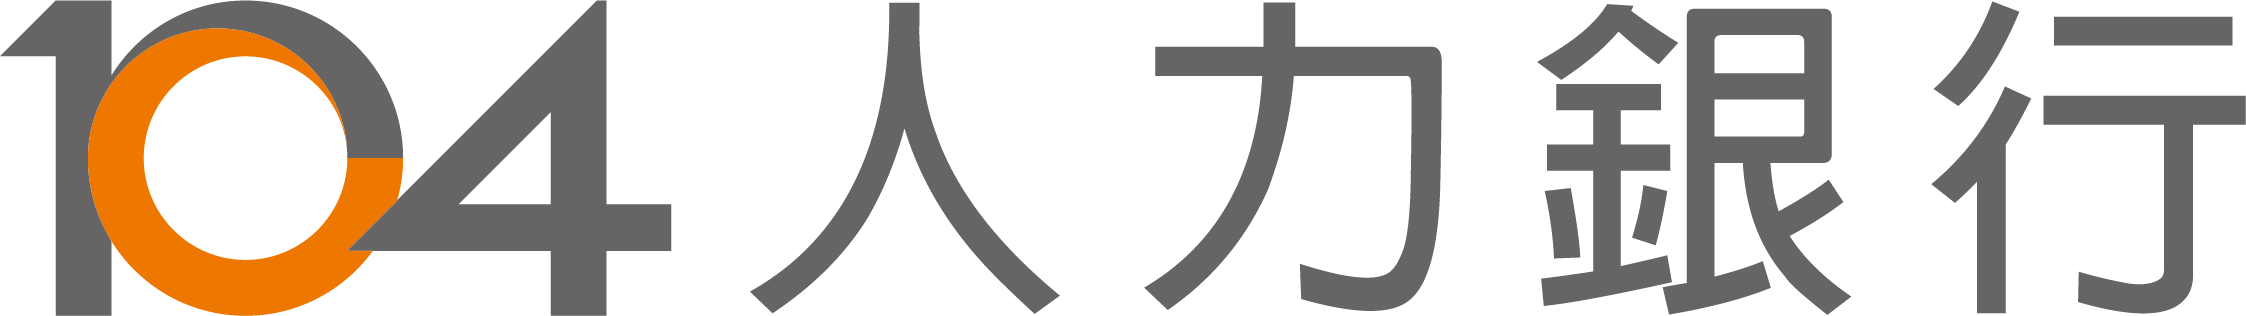 A-23一零四人力銀行logo-CMYK_20200205090739